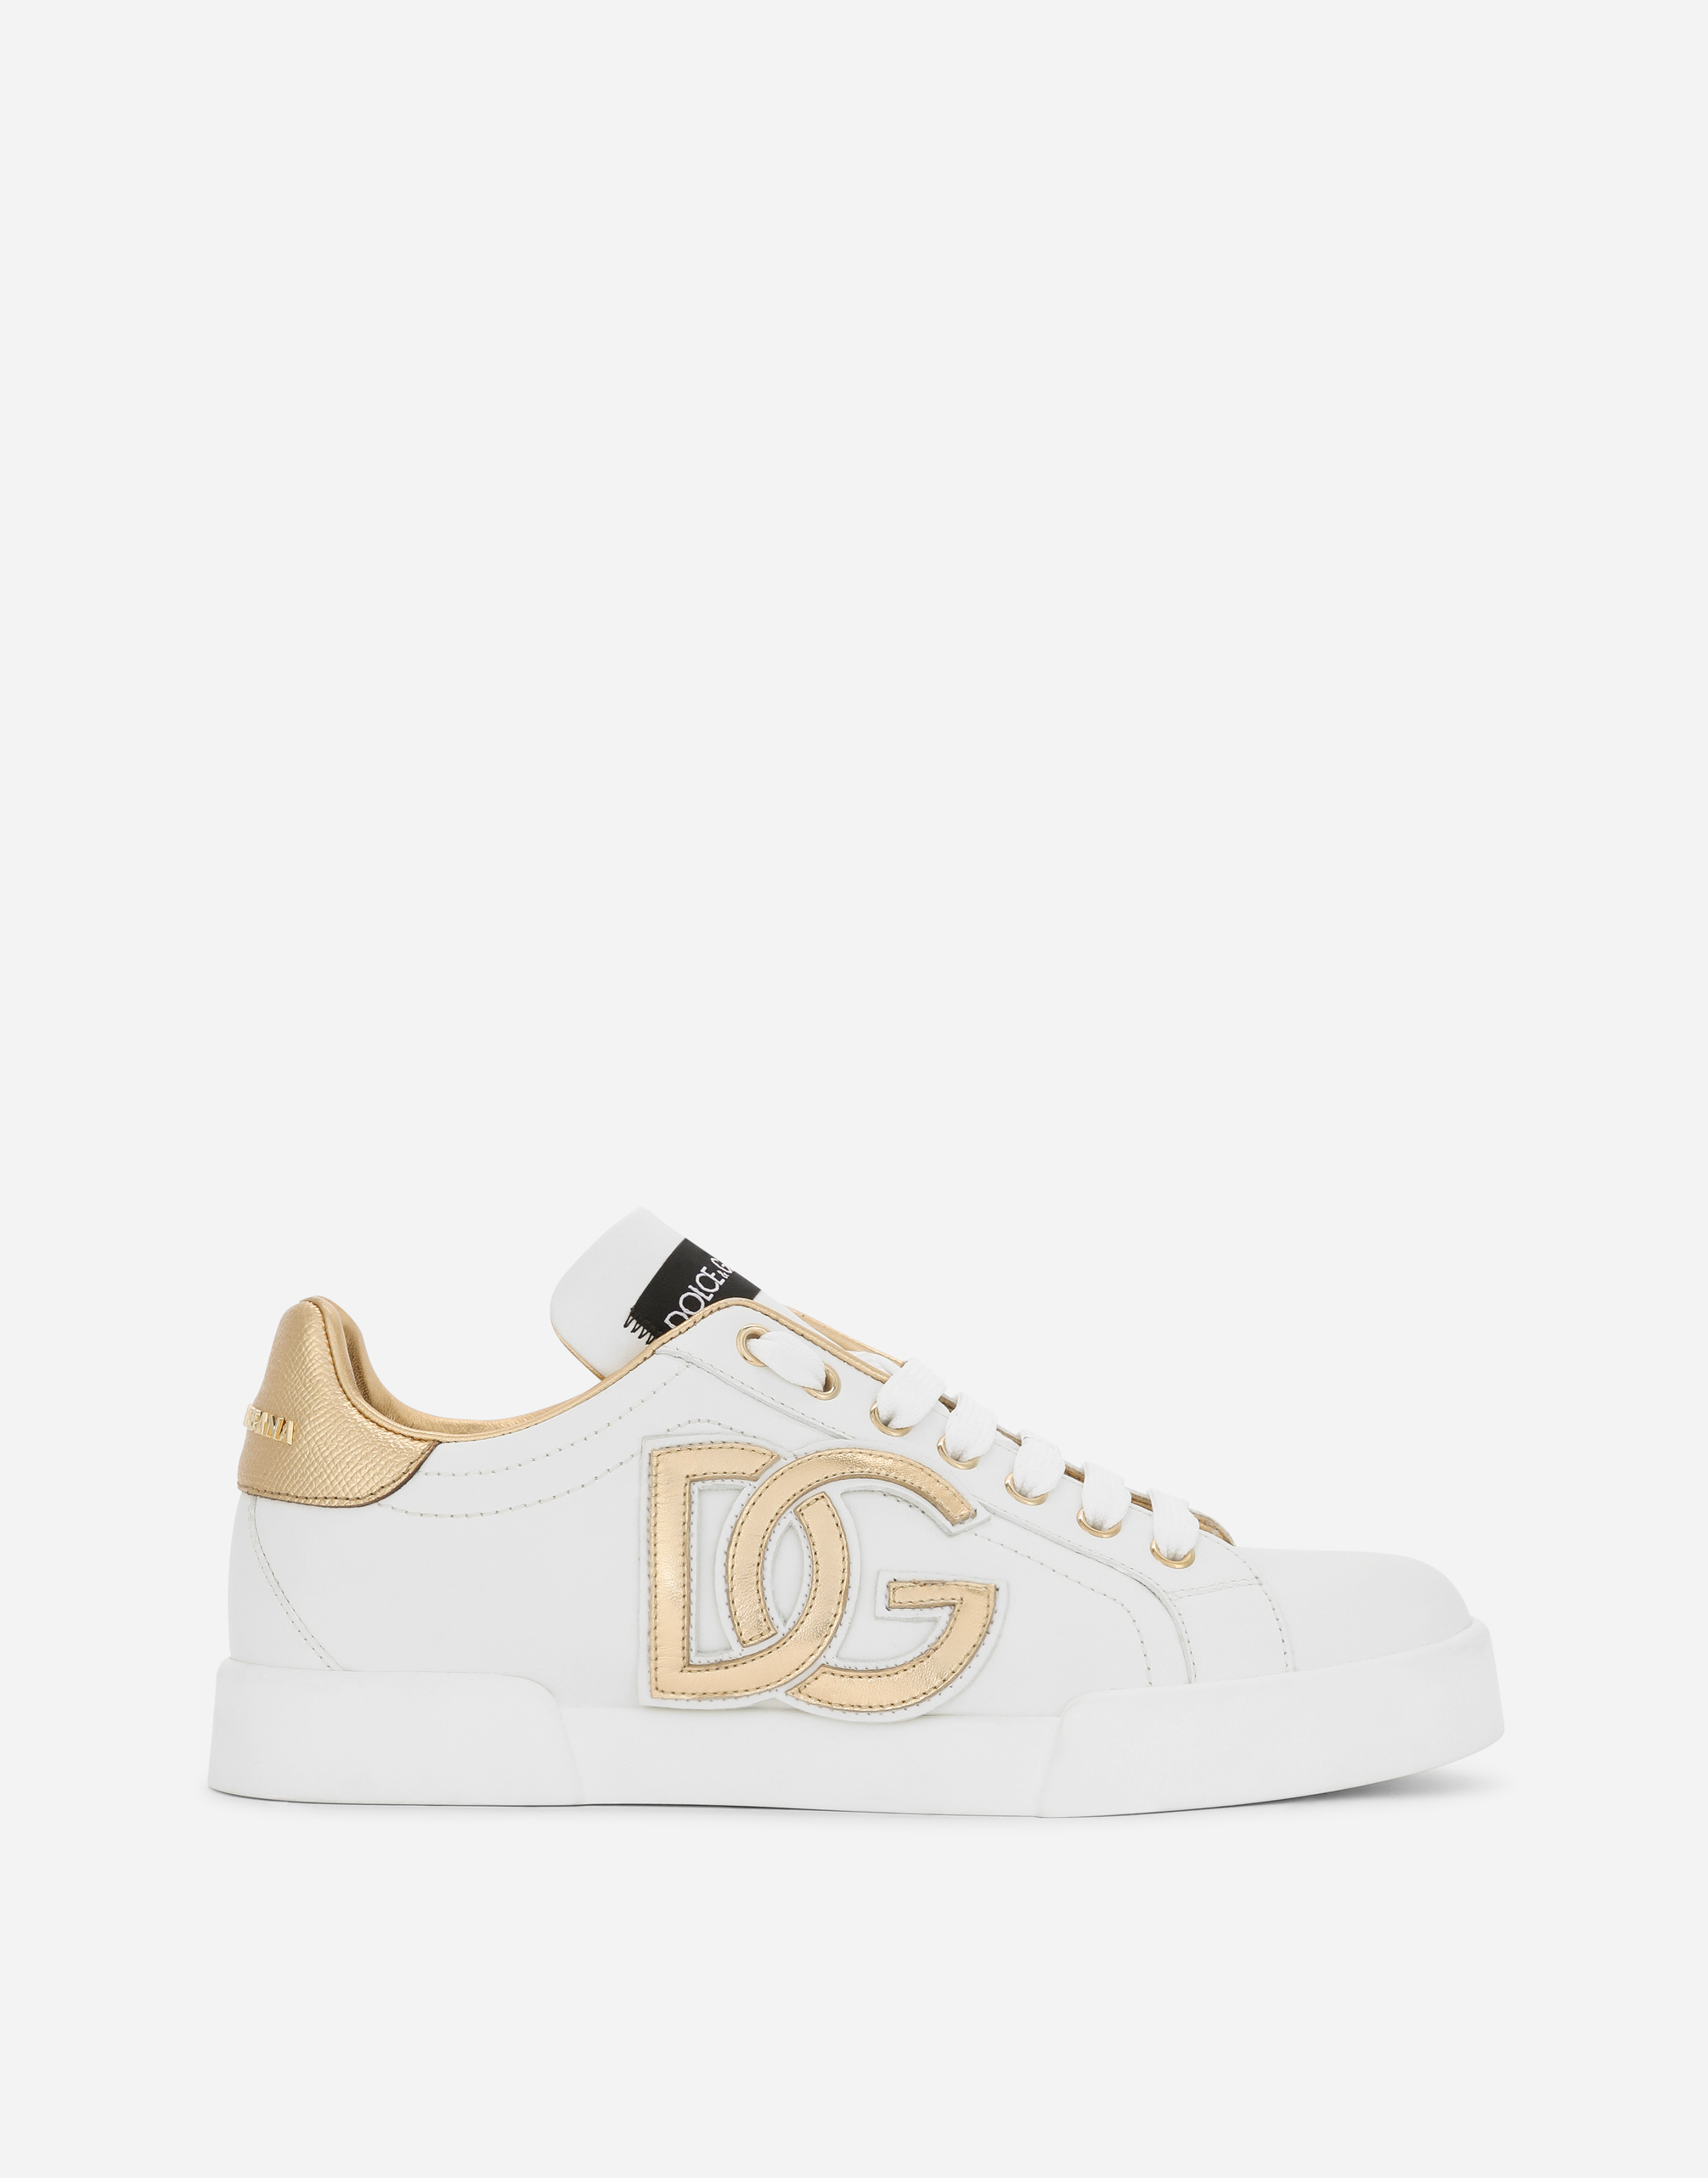 Calfskin Portofino sneakers with DG logo in White for Women | Dolce&Gabbana®